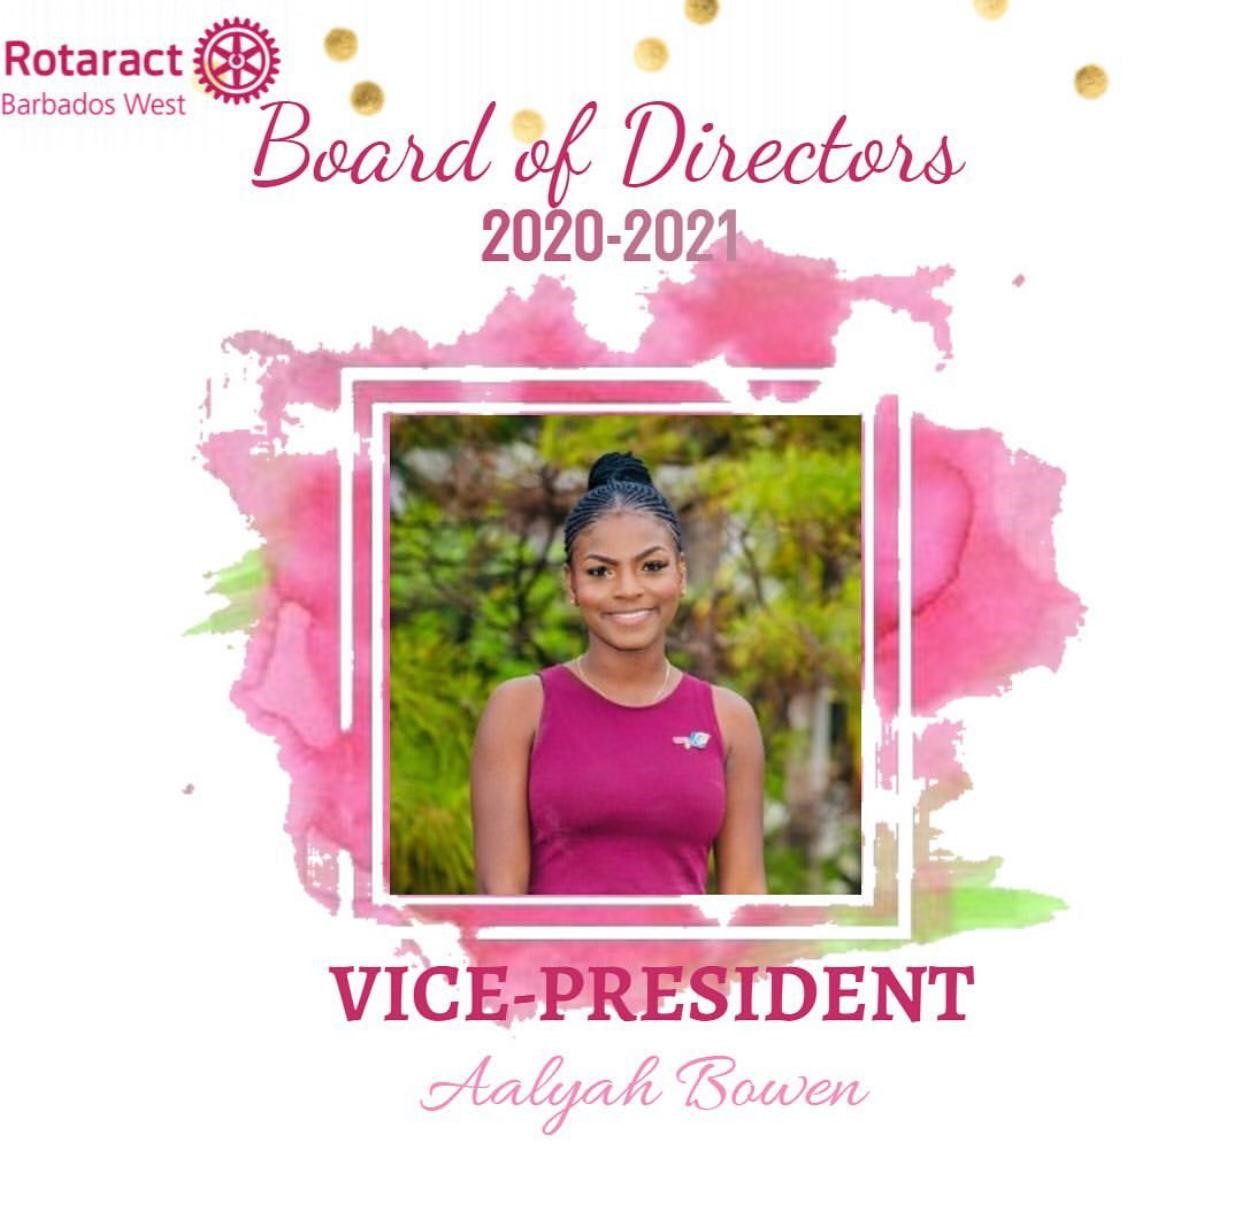 Rotaract Vice President